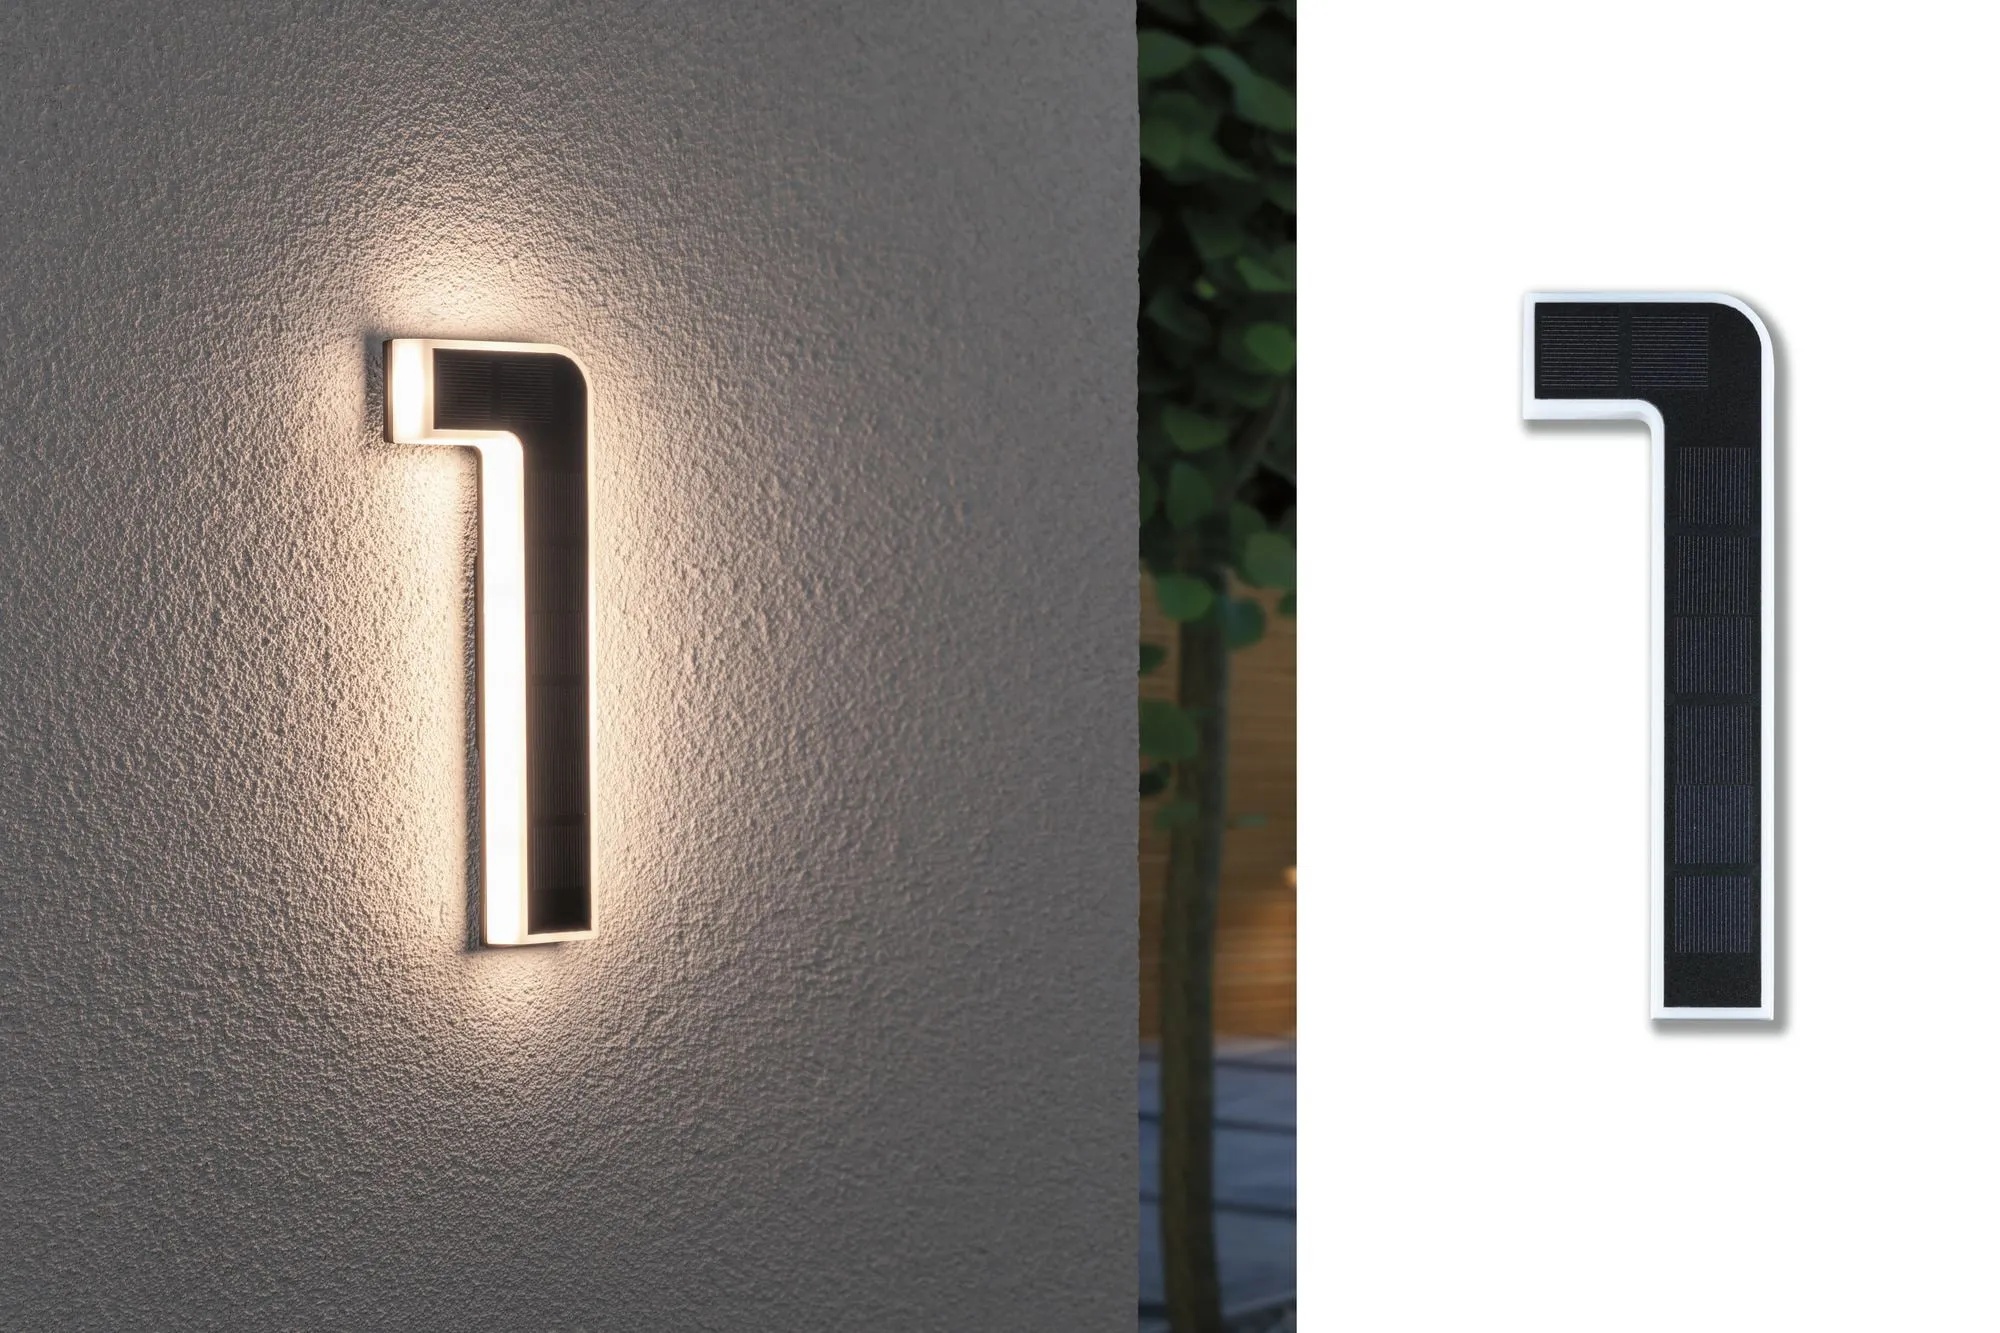 LED Außen-Wandleuchte PAULMANN "Solar Hausnummer" Lampen Gr. 1 flammig, Höhe: 23 cm, Ziffer 1, schwarz LED Außenwandleuchten Hausnummern 0-9 wählbar, Akku wechselbar